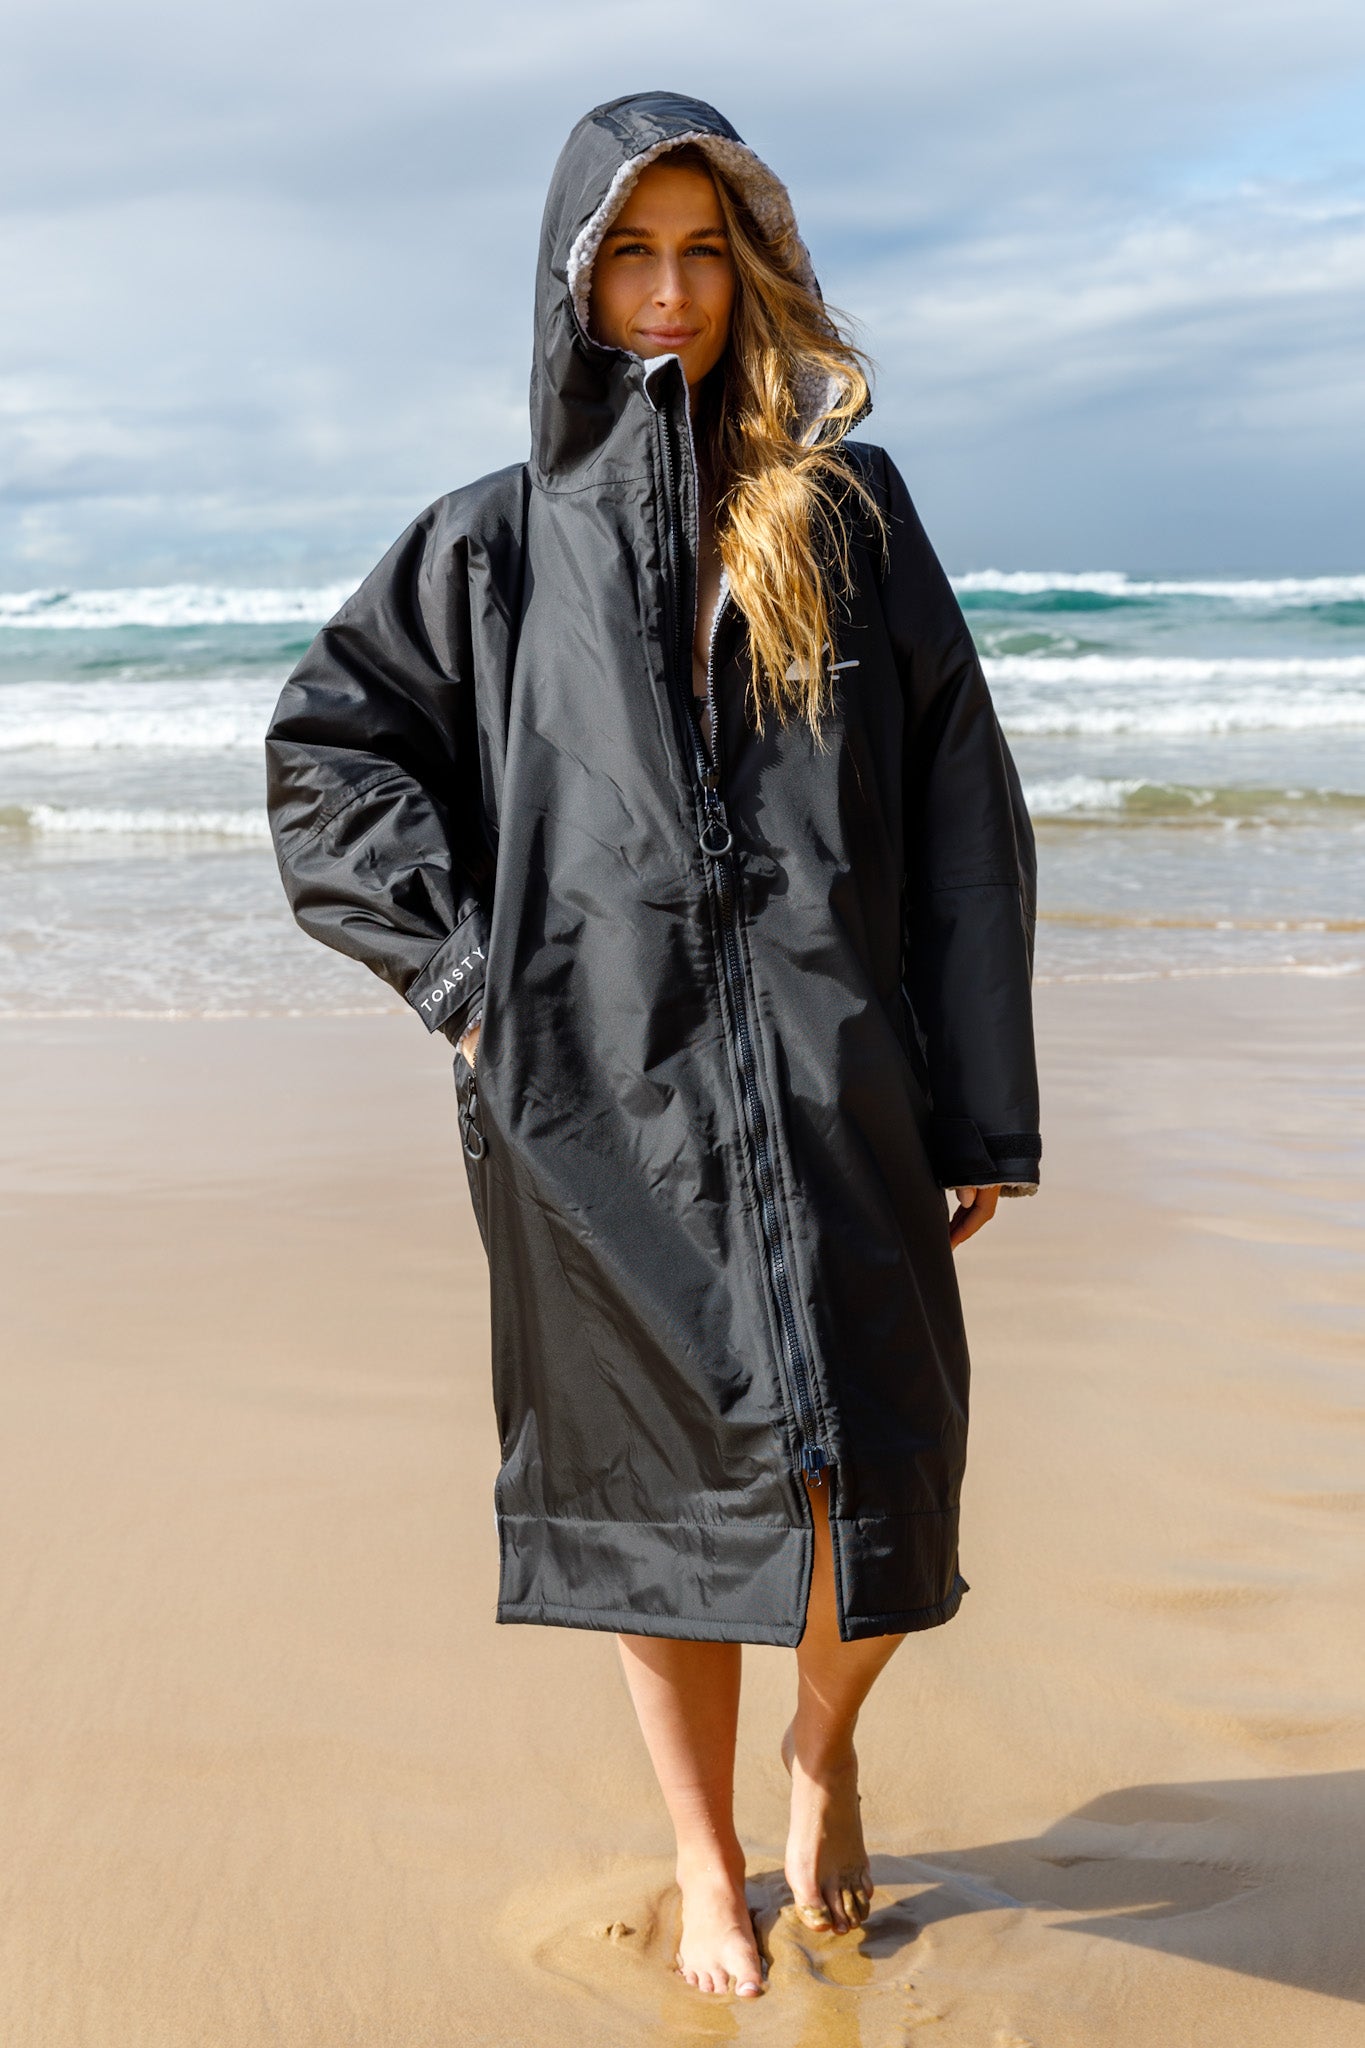 TOASTY Fleece lined weatherproof jacket in black worn by a girl on the beach